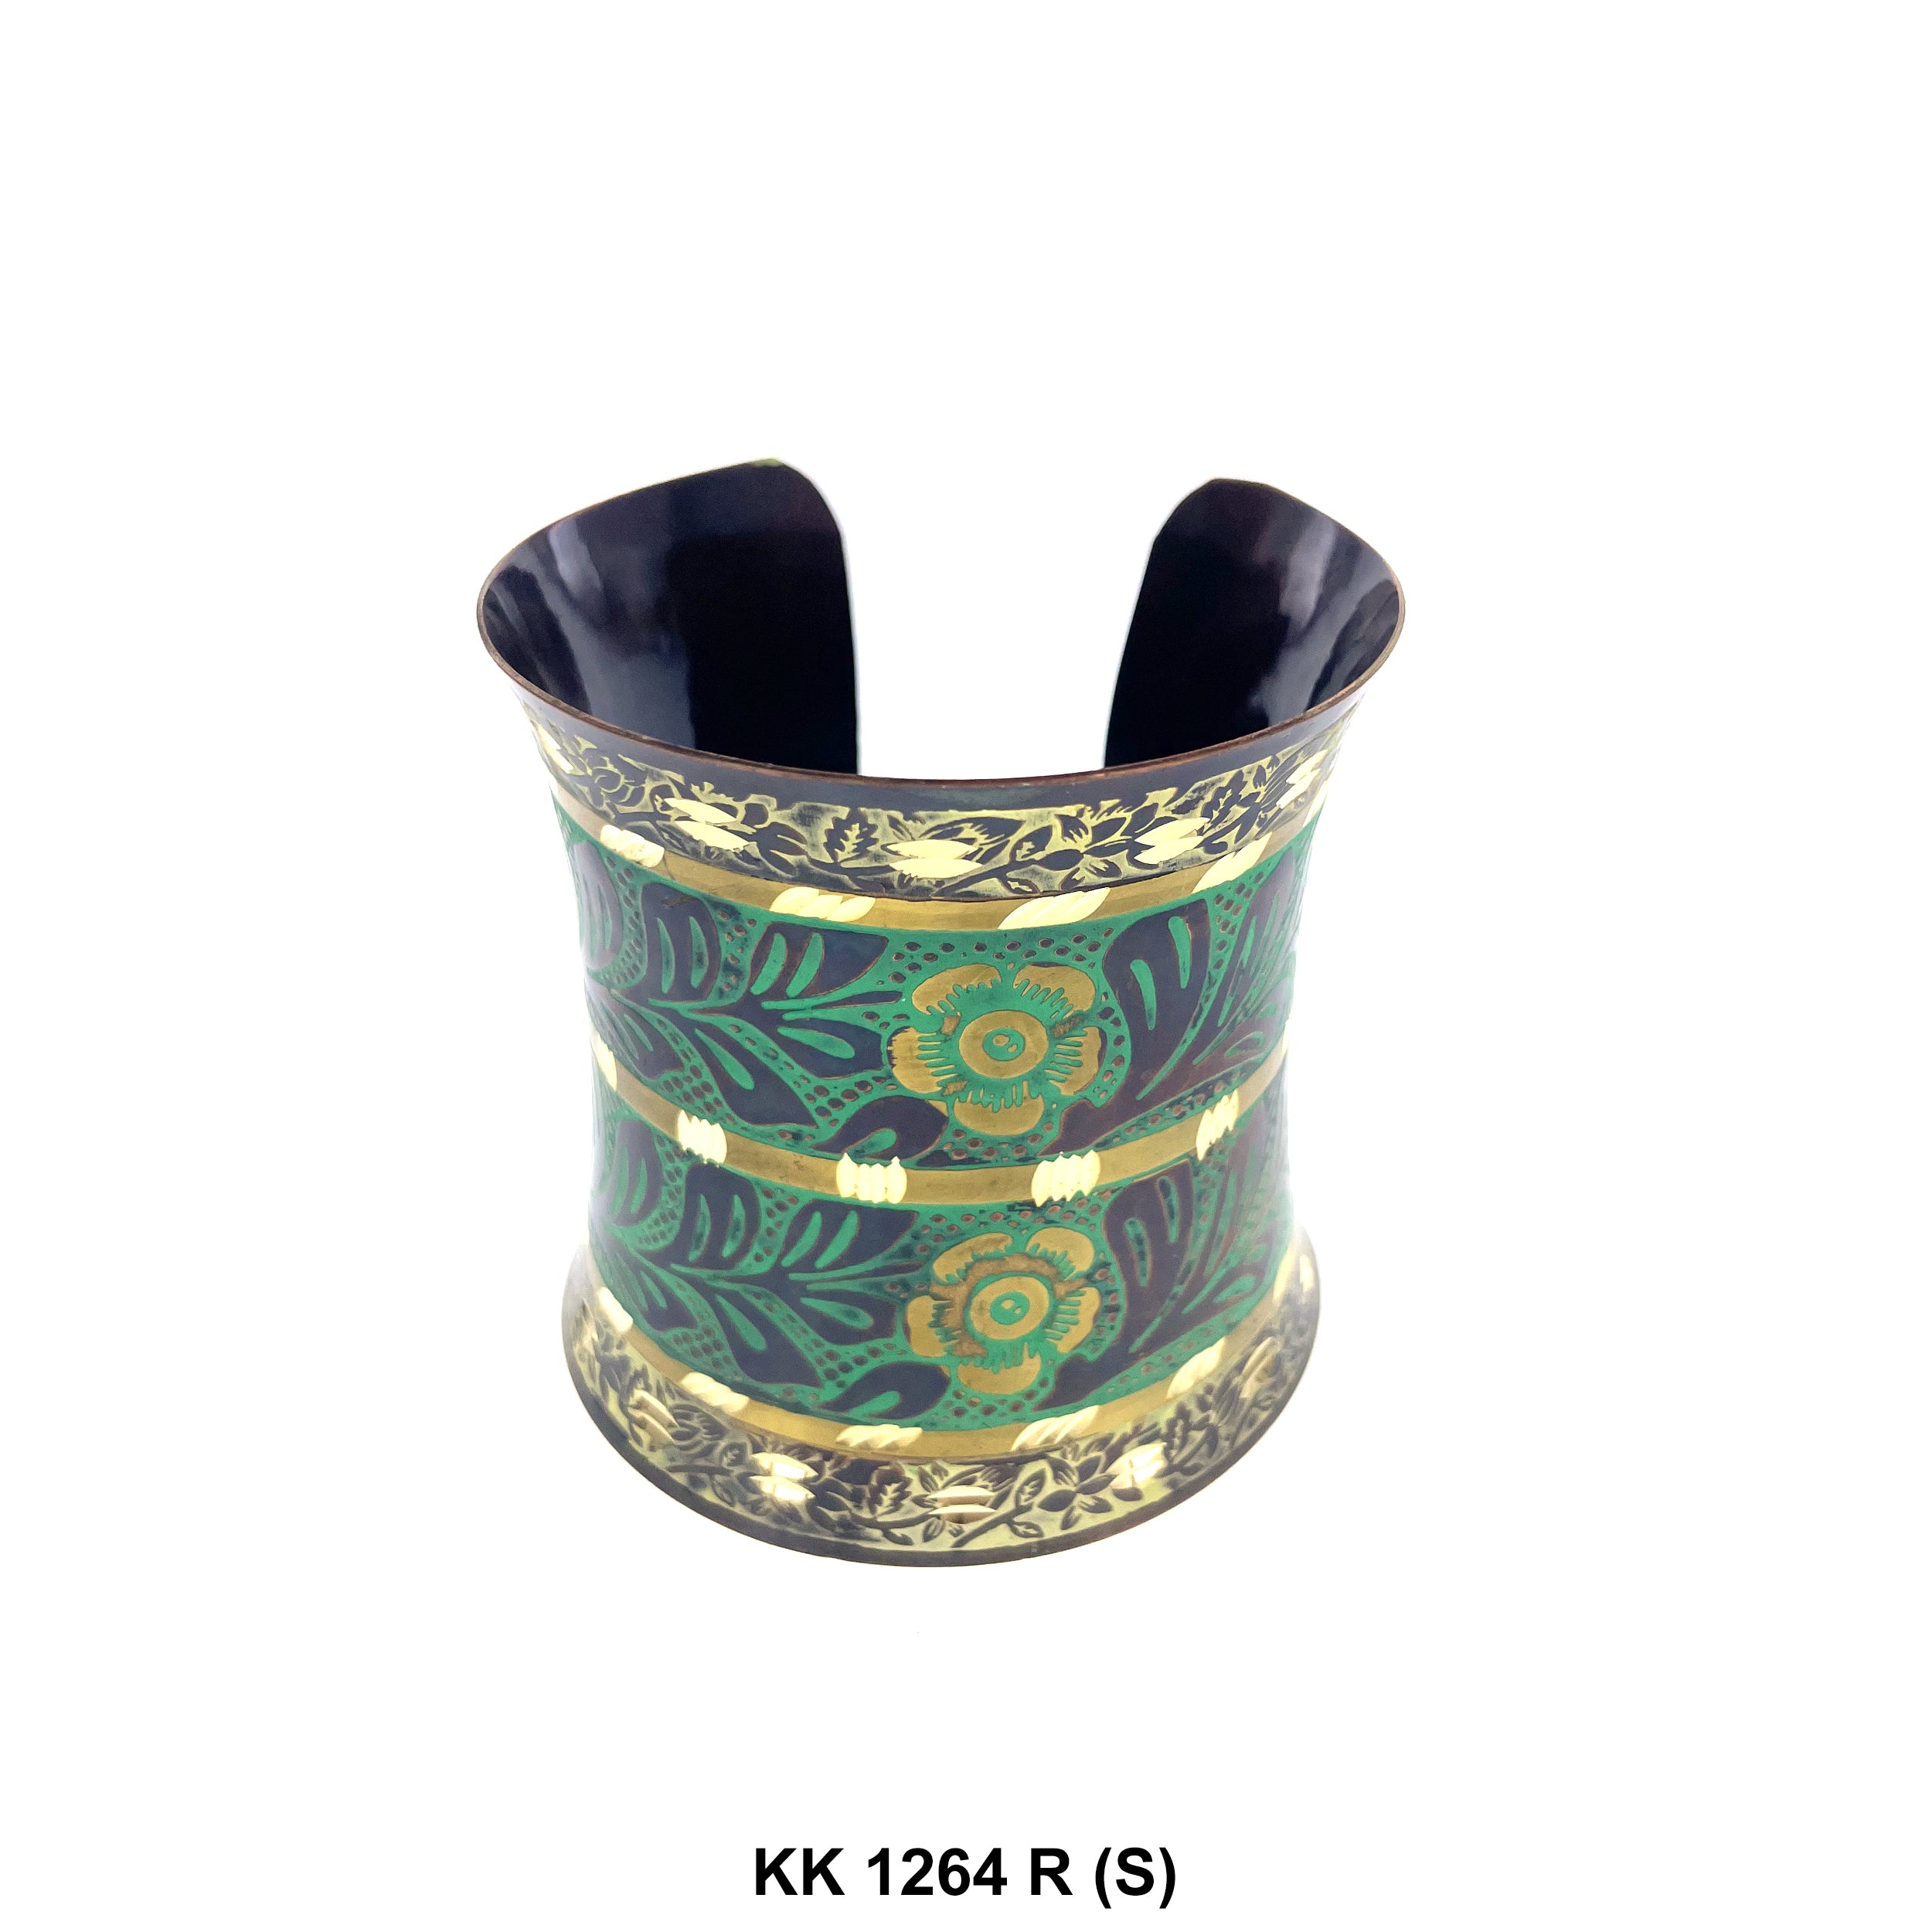 Hand Engraved Cuff Bangle Bracelet KK 1264 R (S)